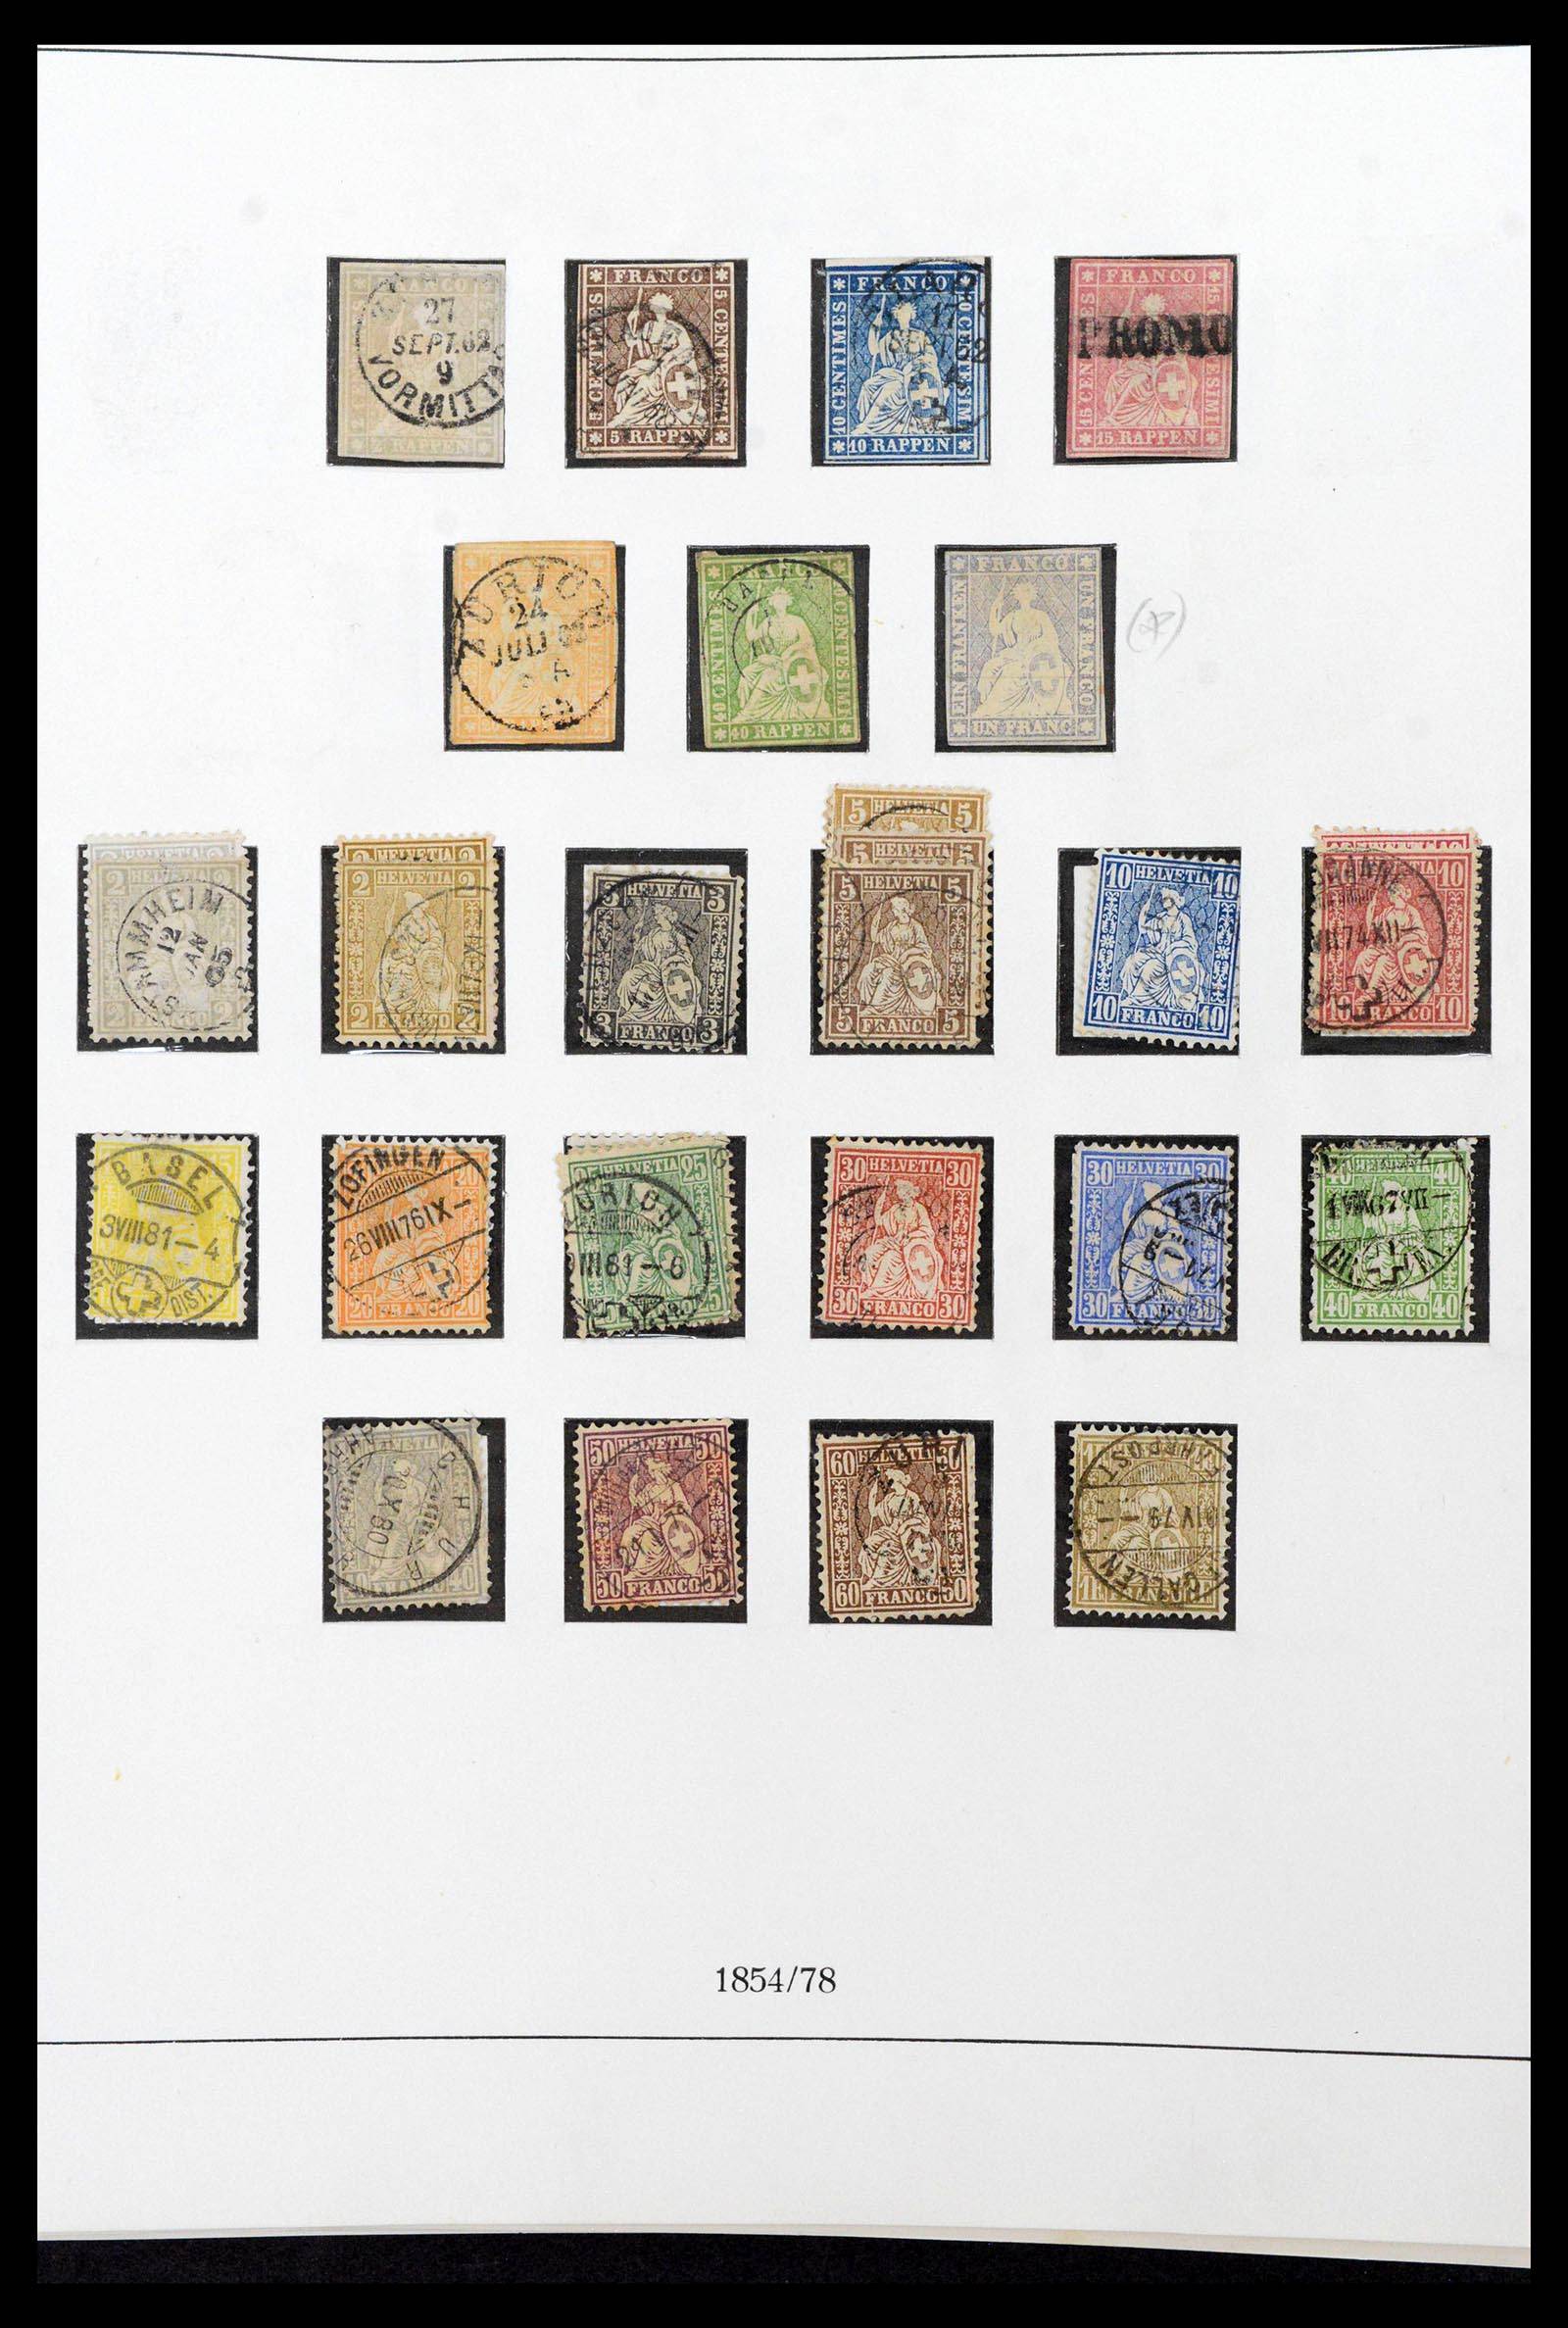 39235 0004 - Stamp collection 39235 Switzerland 1843-1960.